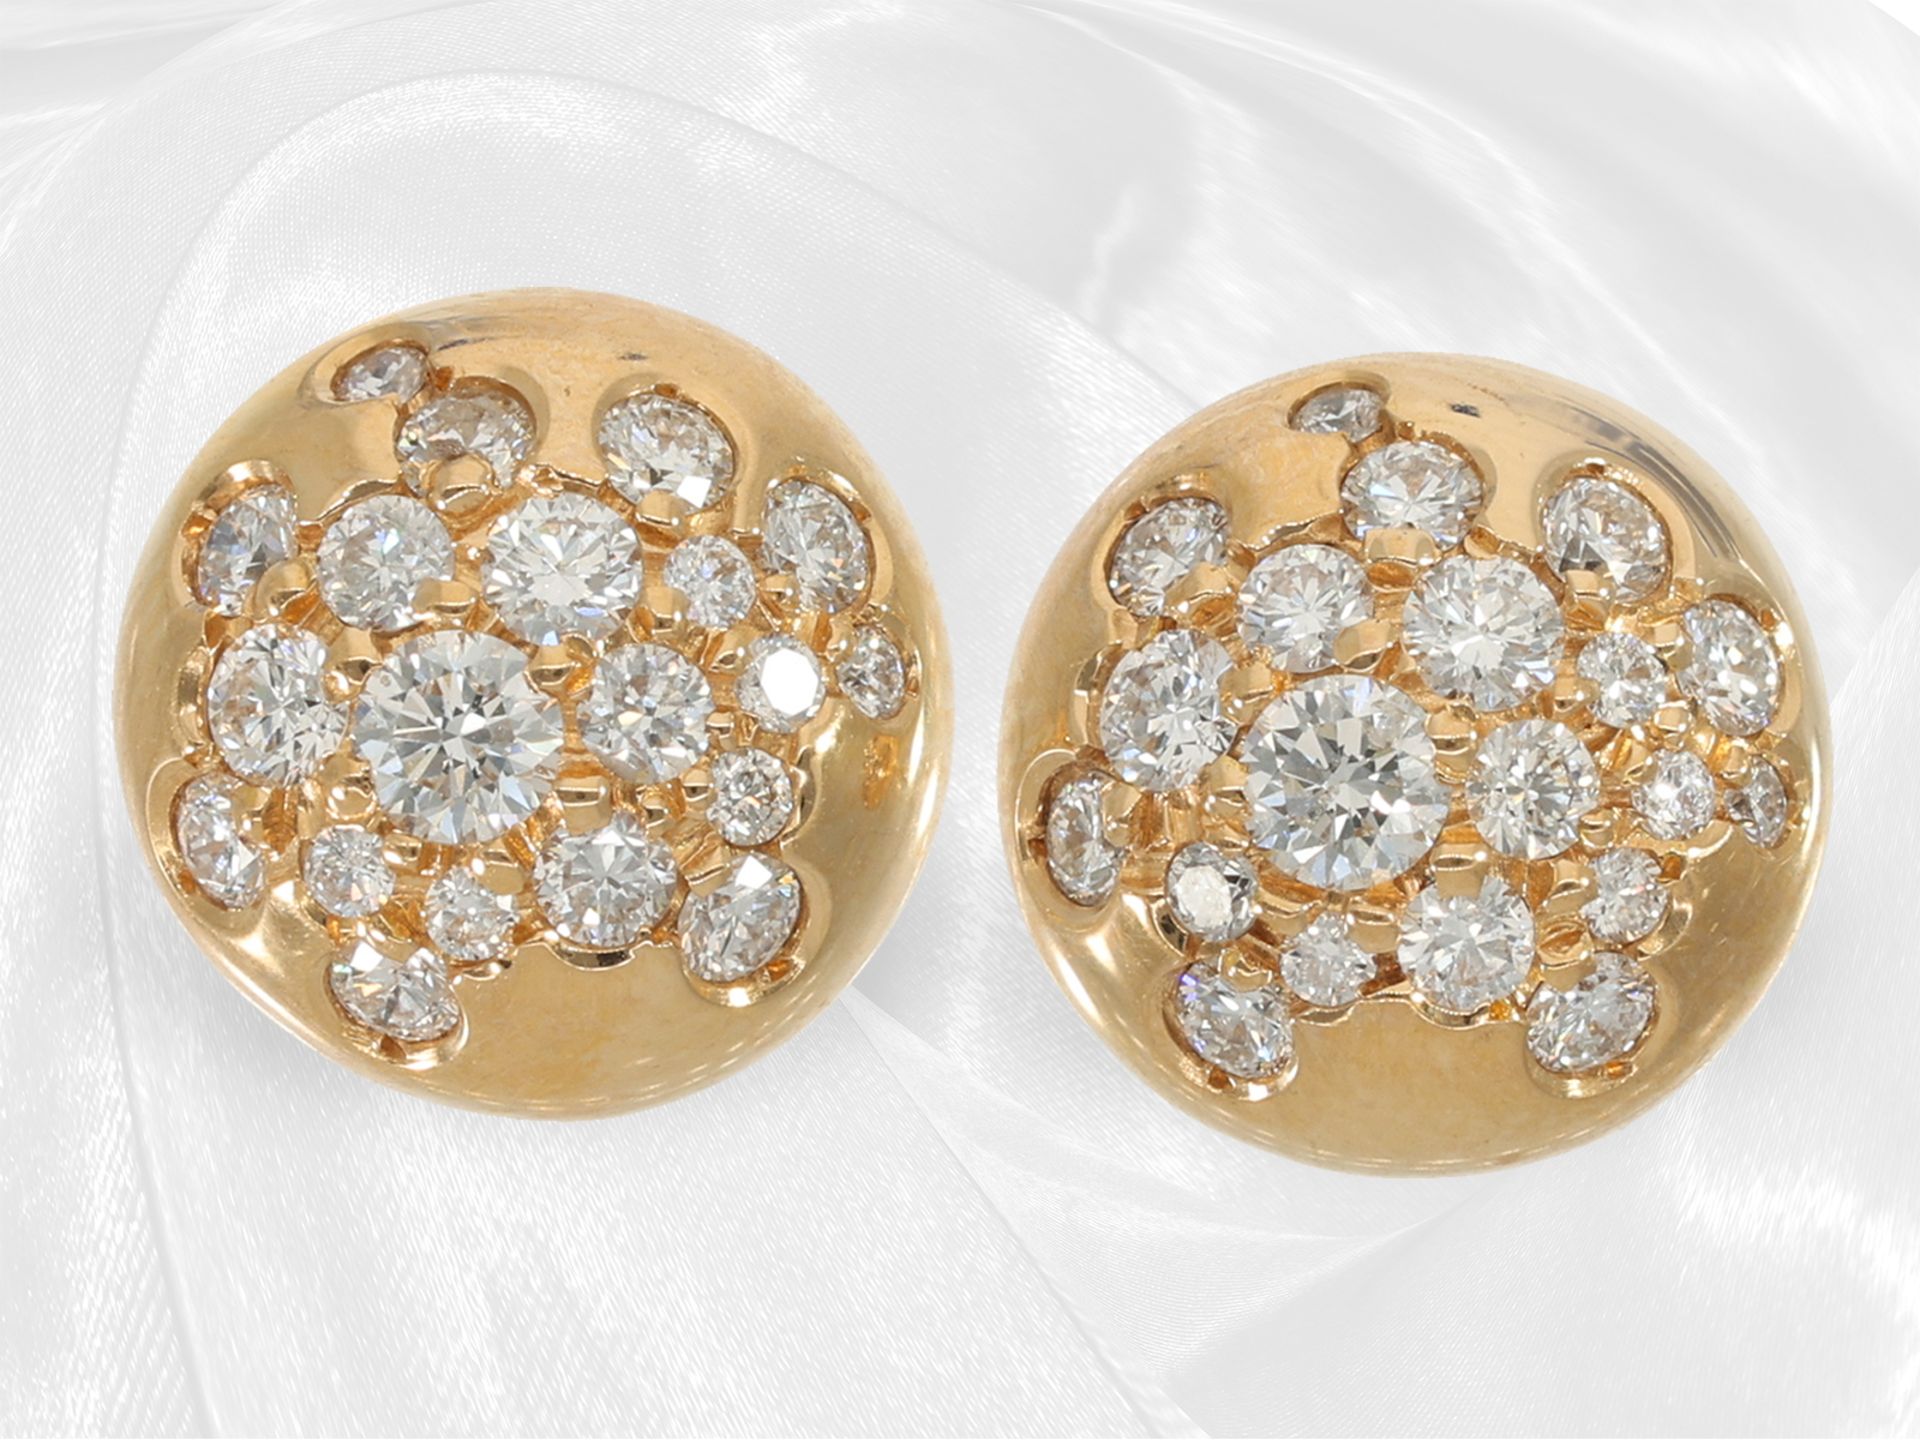 Pink gold unworn designer brilliant-cut diamond stud earrings from Cervera, model "Button", handmade - Image 4 of 4